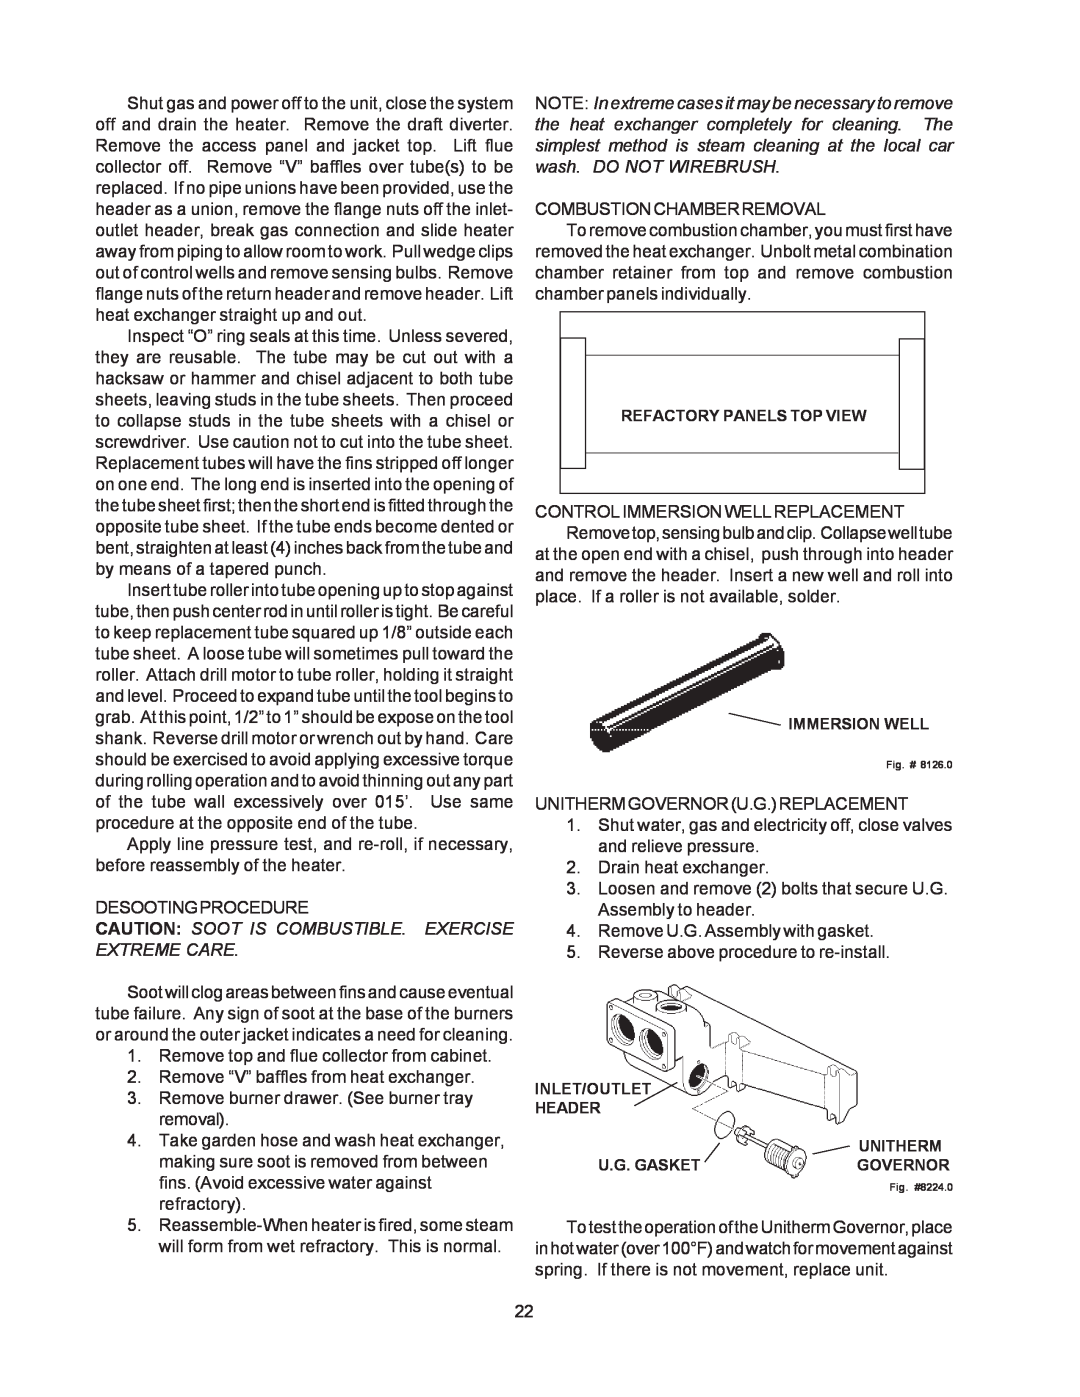 Raypak 514-824 manual Desootingprocedure 